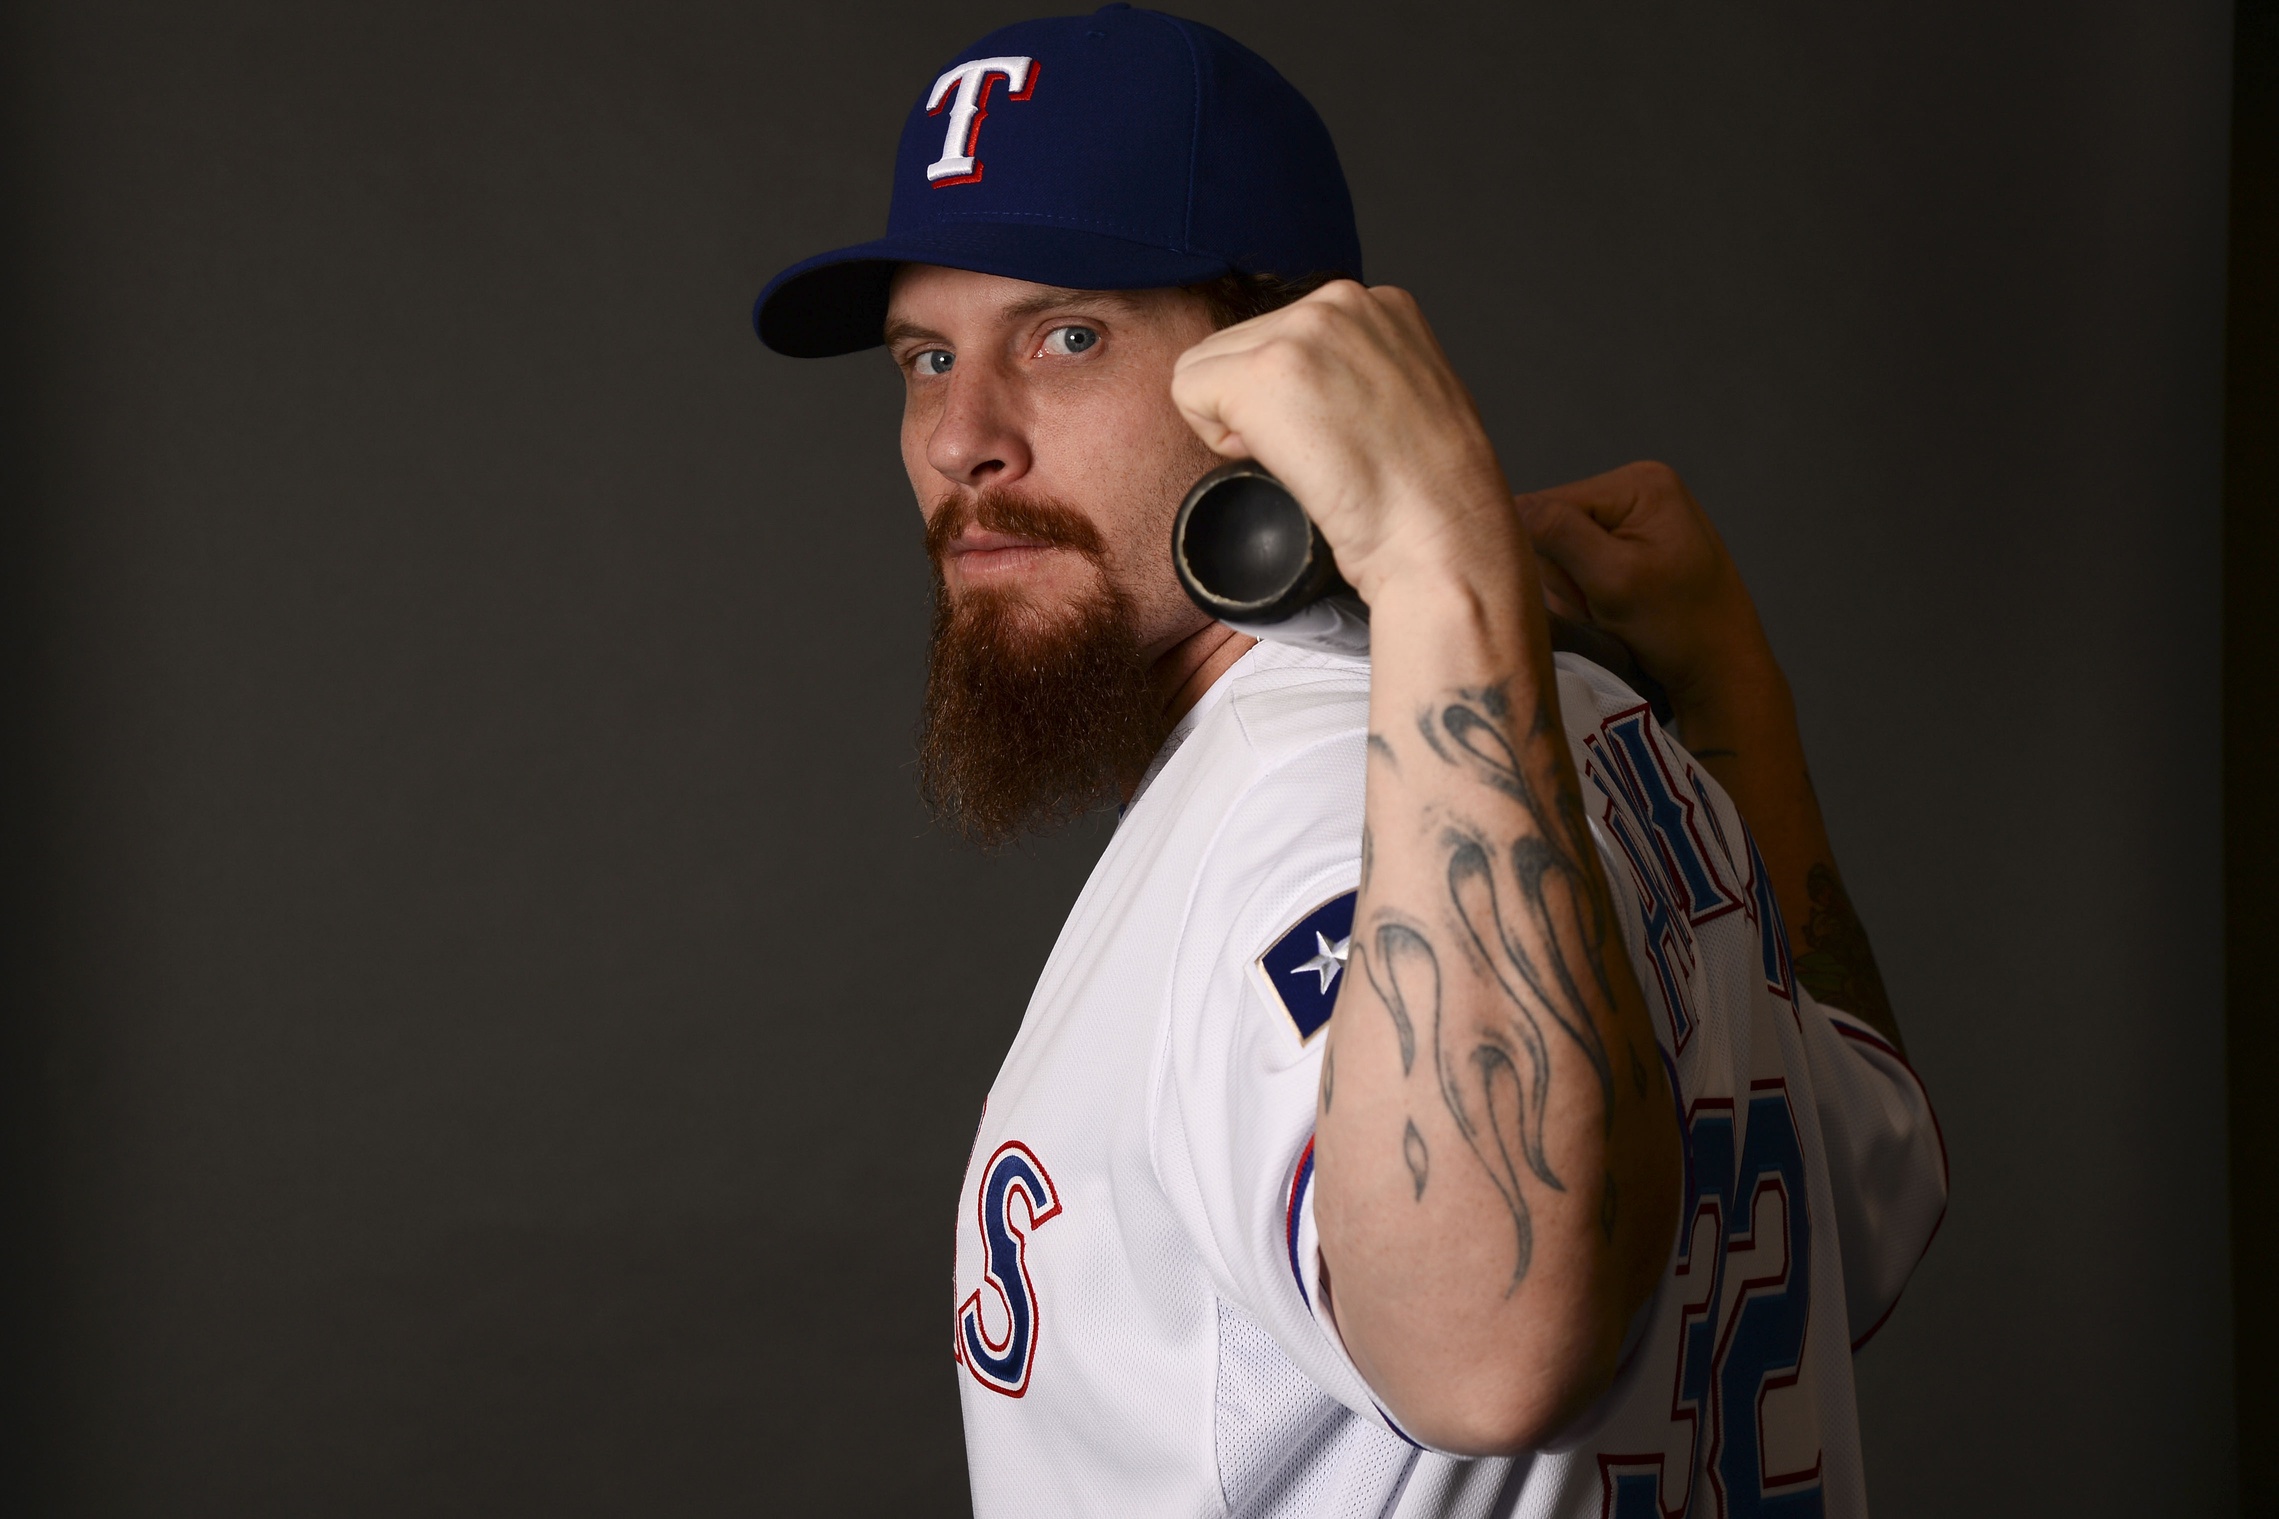 Texas Rangers re-sign OF Josh Hamilton to minor league deal 